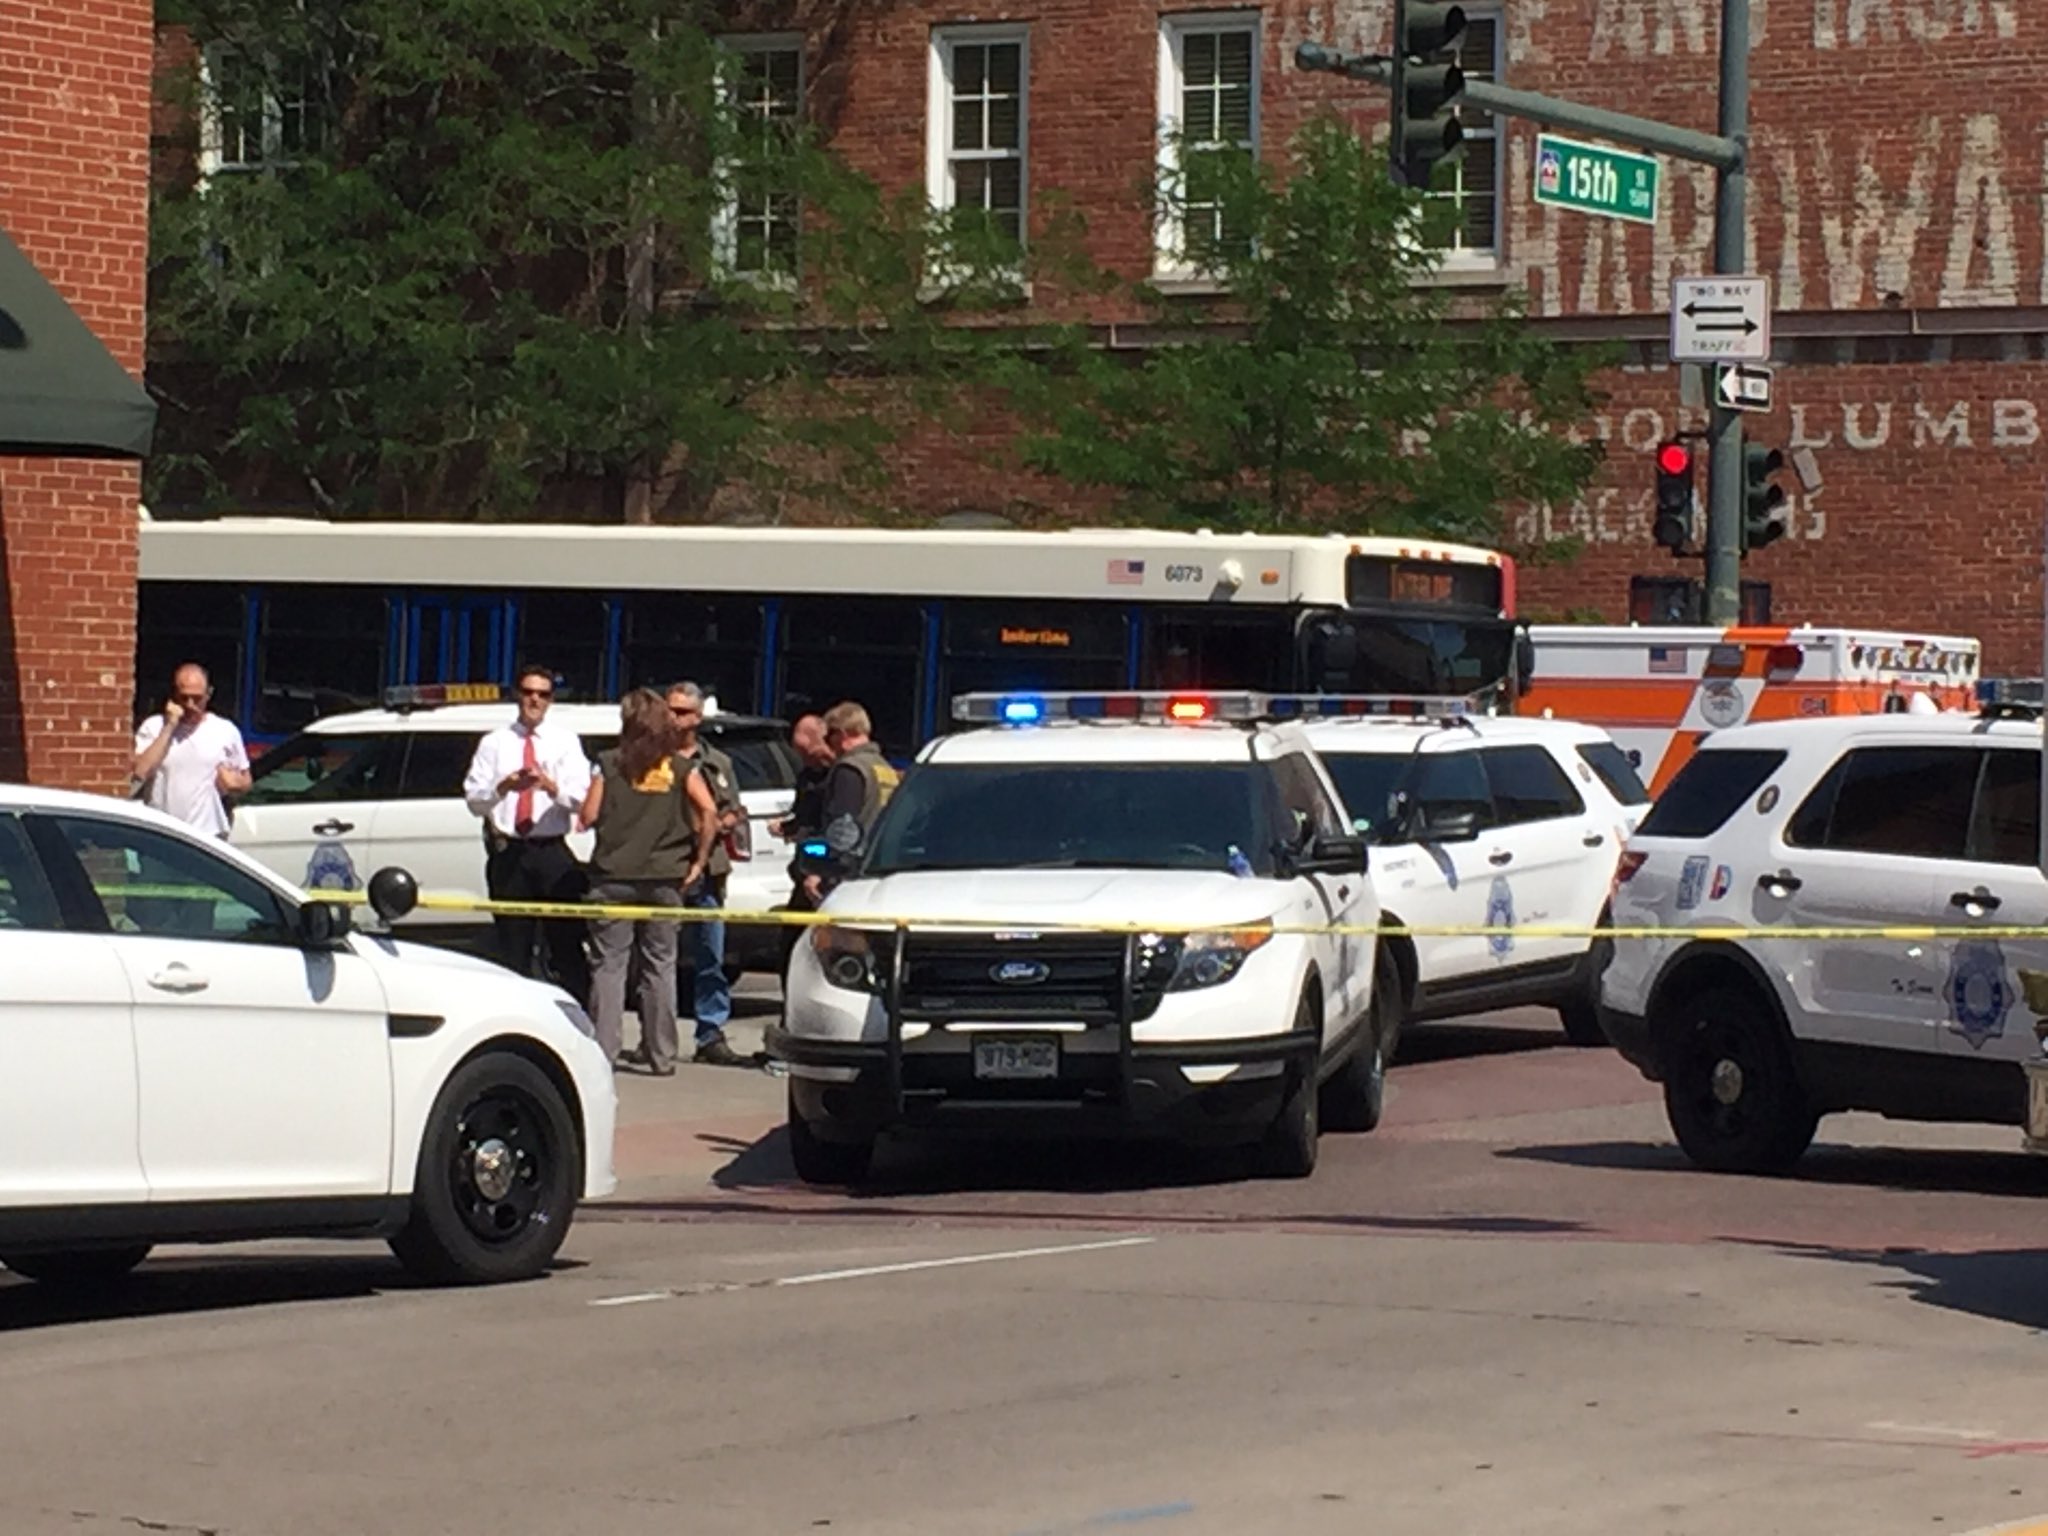 The scene of the shooting. (Denver Police)